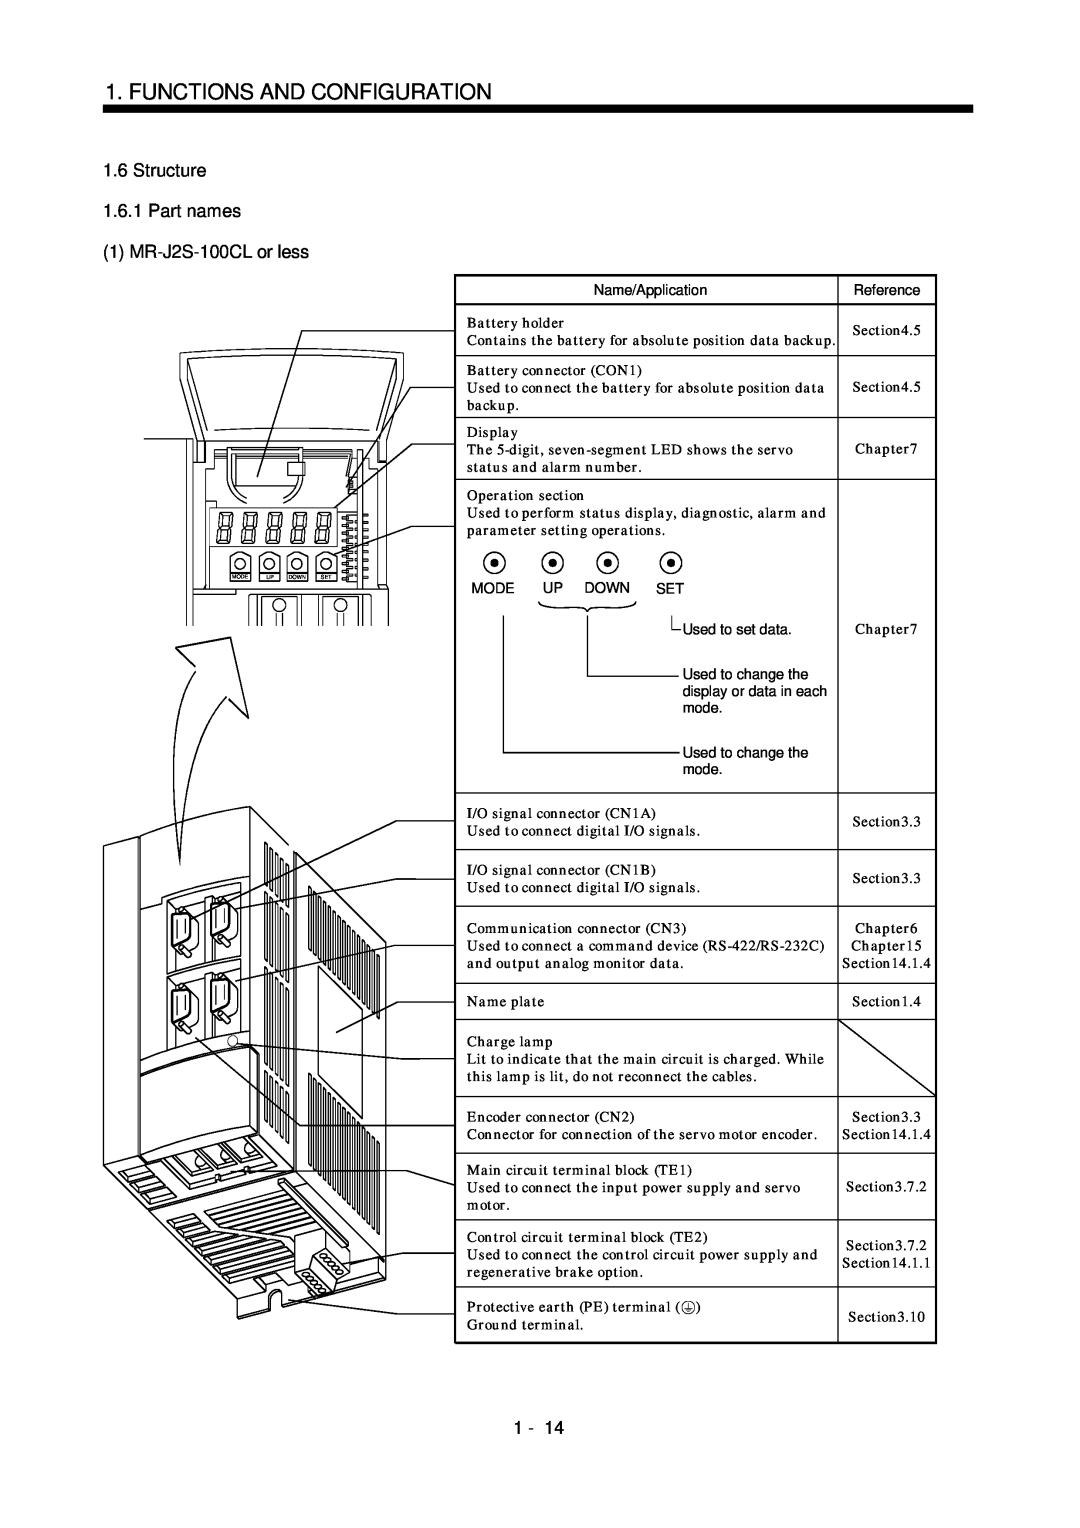 Mitsubishi Electronics MR-J2S- CL 1.6Structure 1.6.1 Part names, MR-J2S-100CLor less, Functions And Configuration 